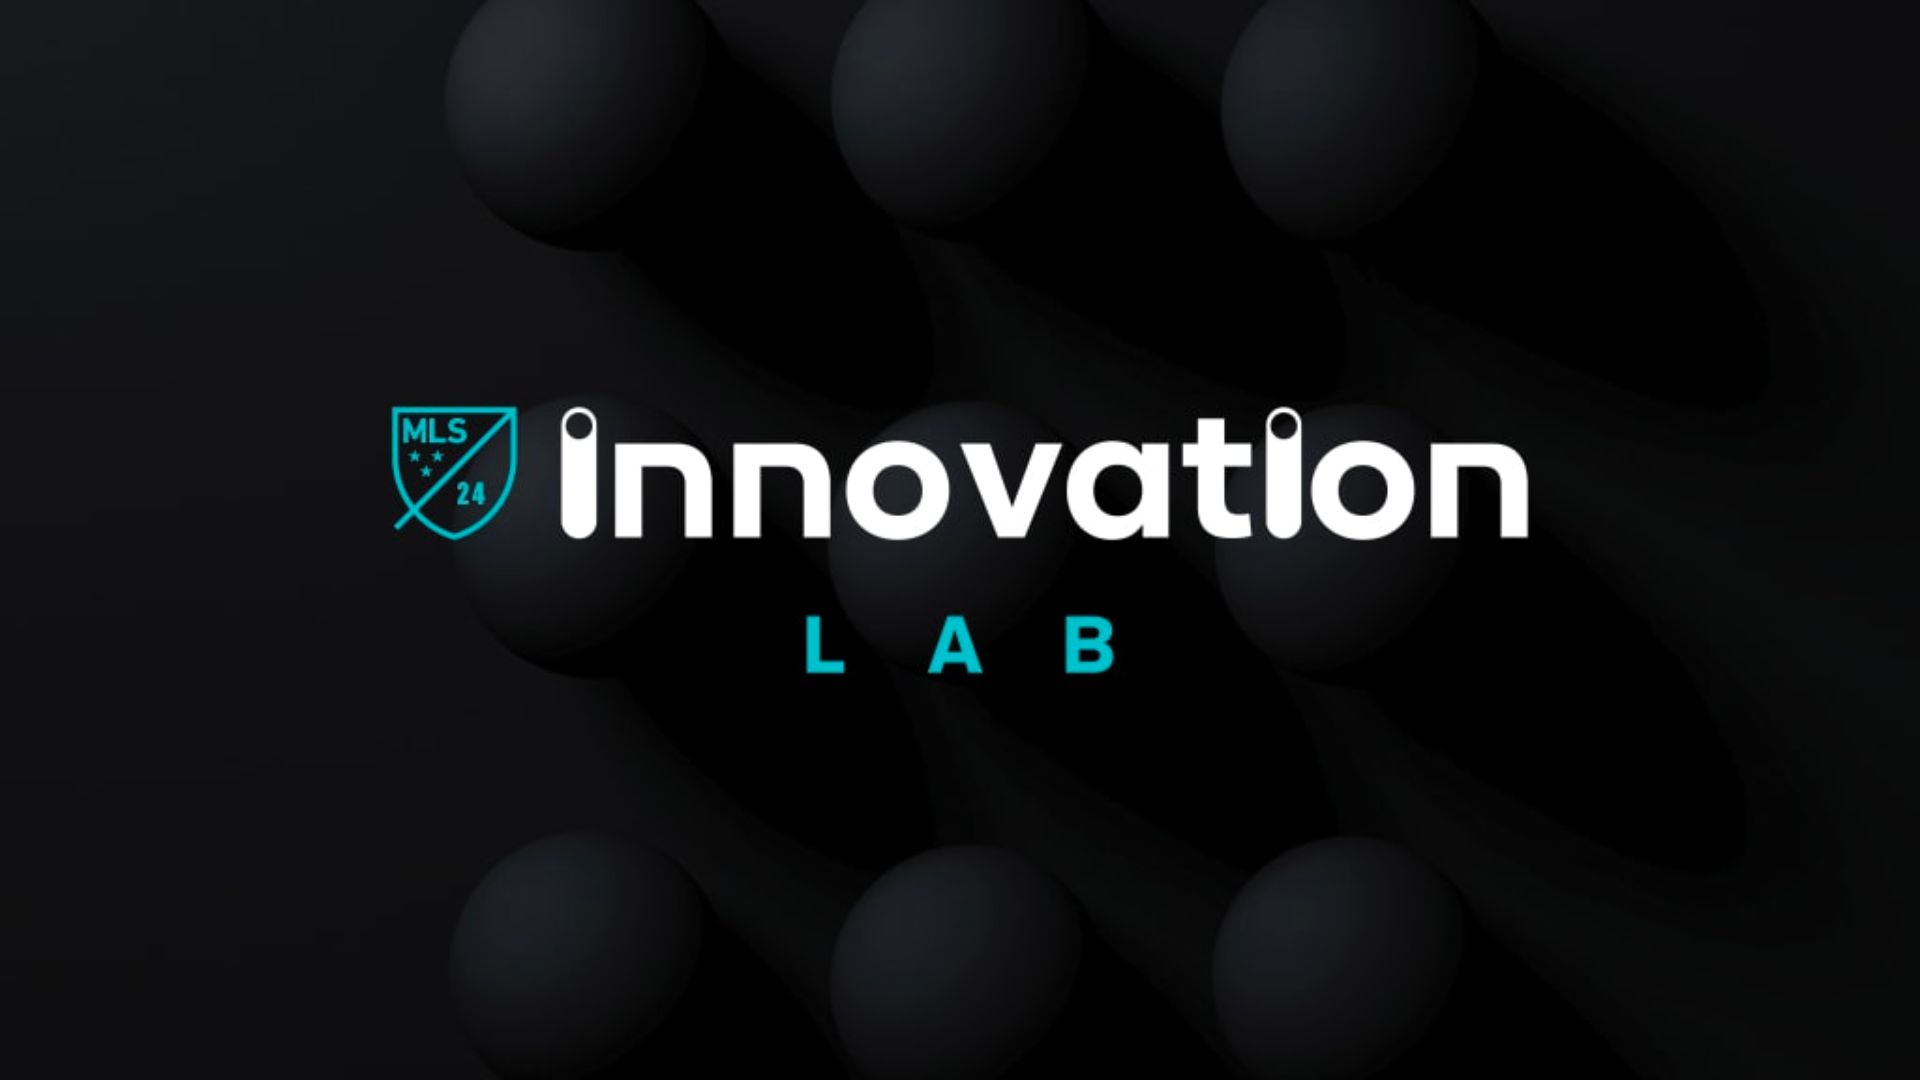 innovation lab mls helping startups in sports